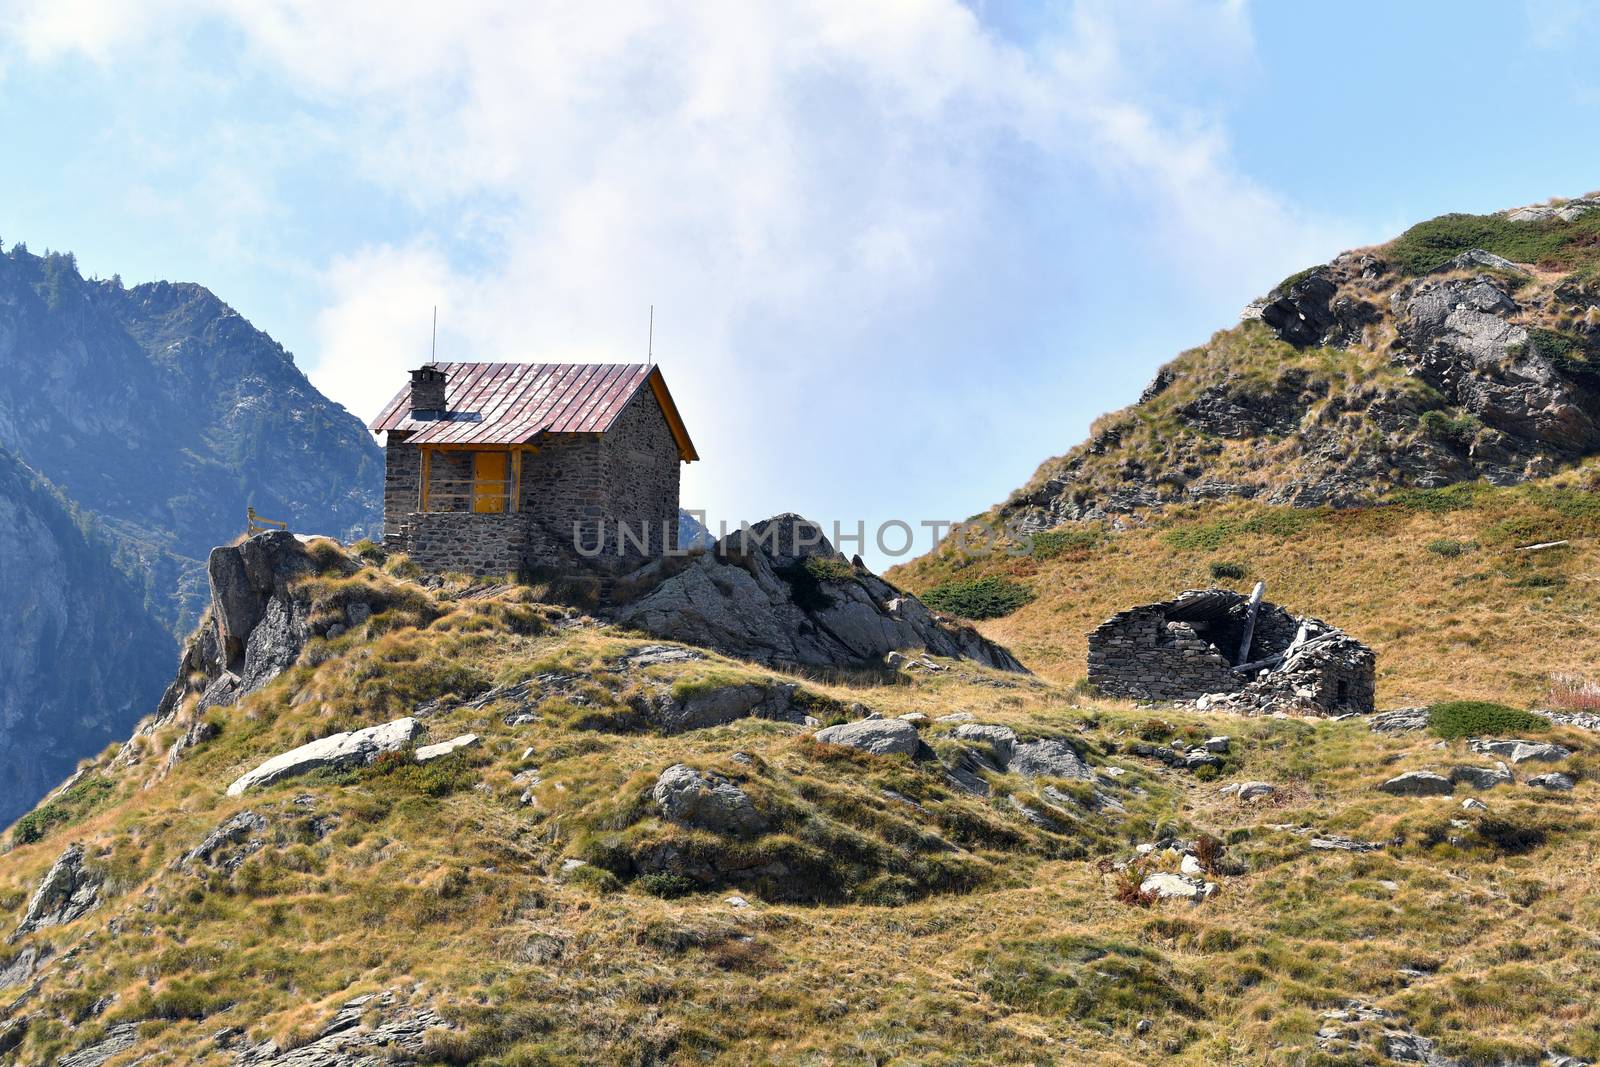 The Amici hut by bongia